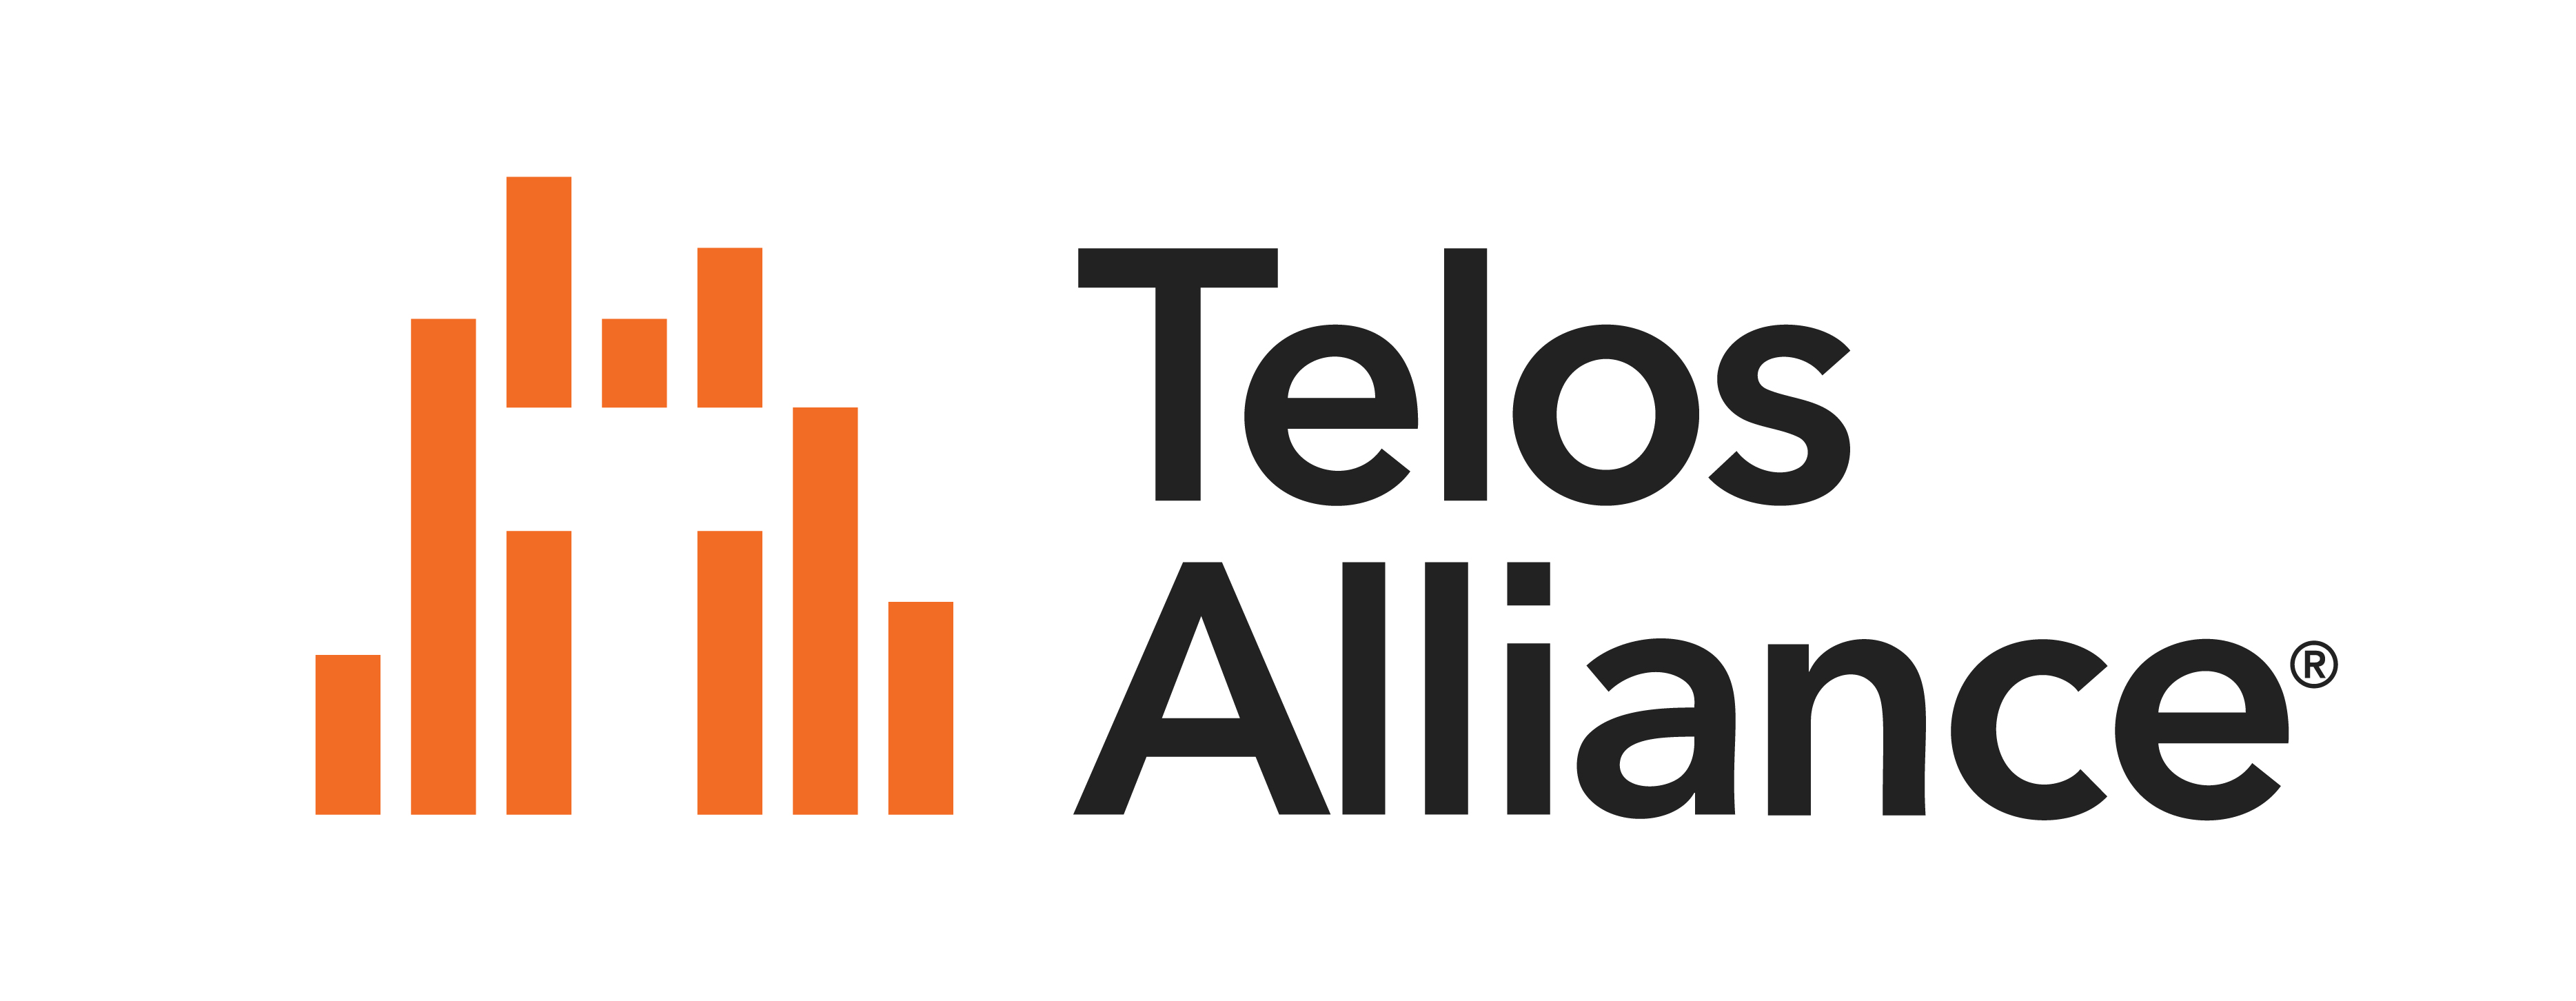 The Telos Alliance